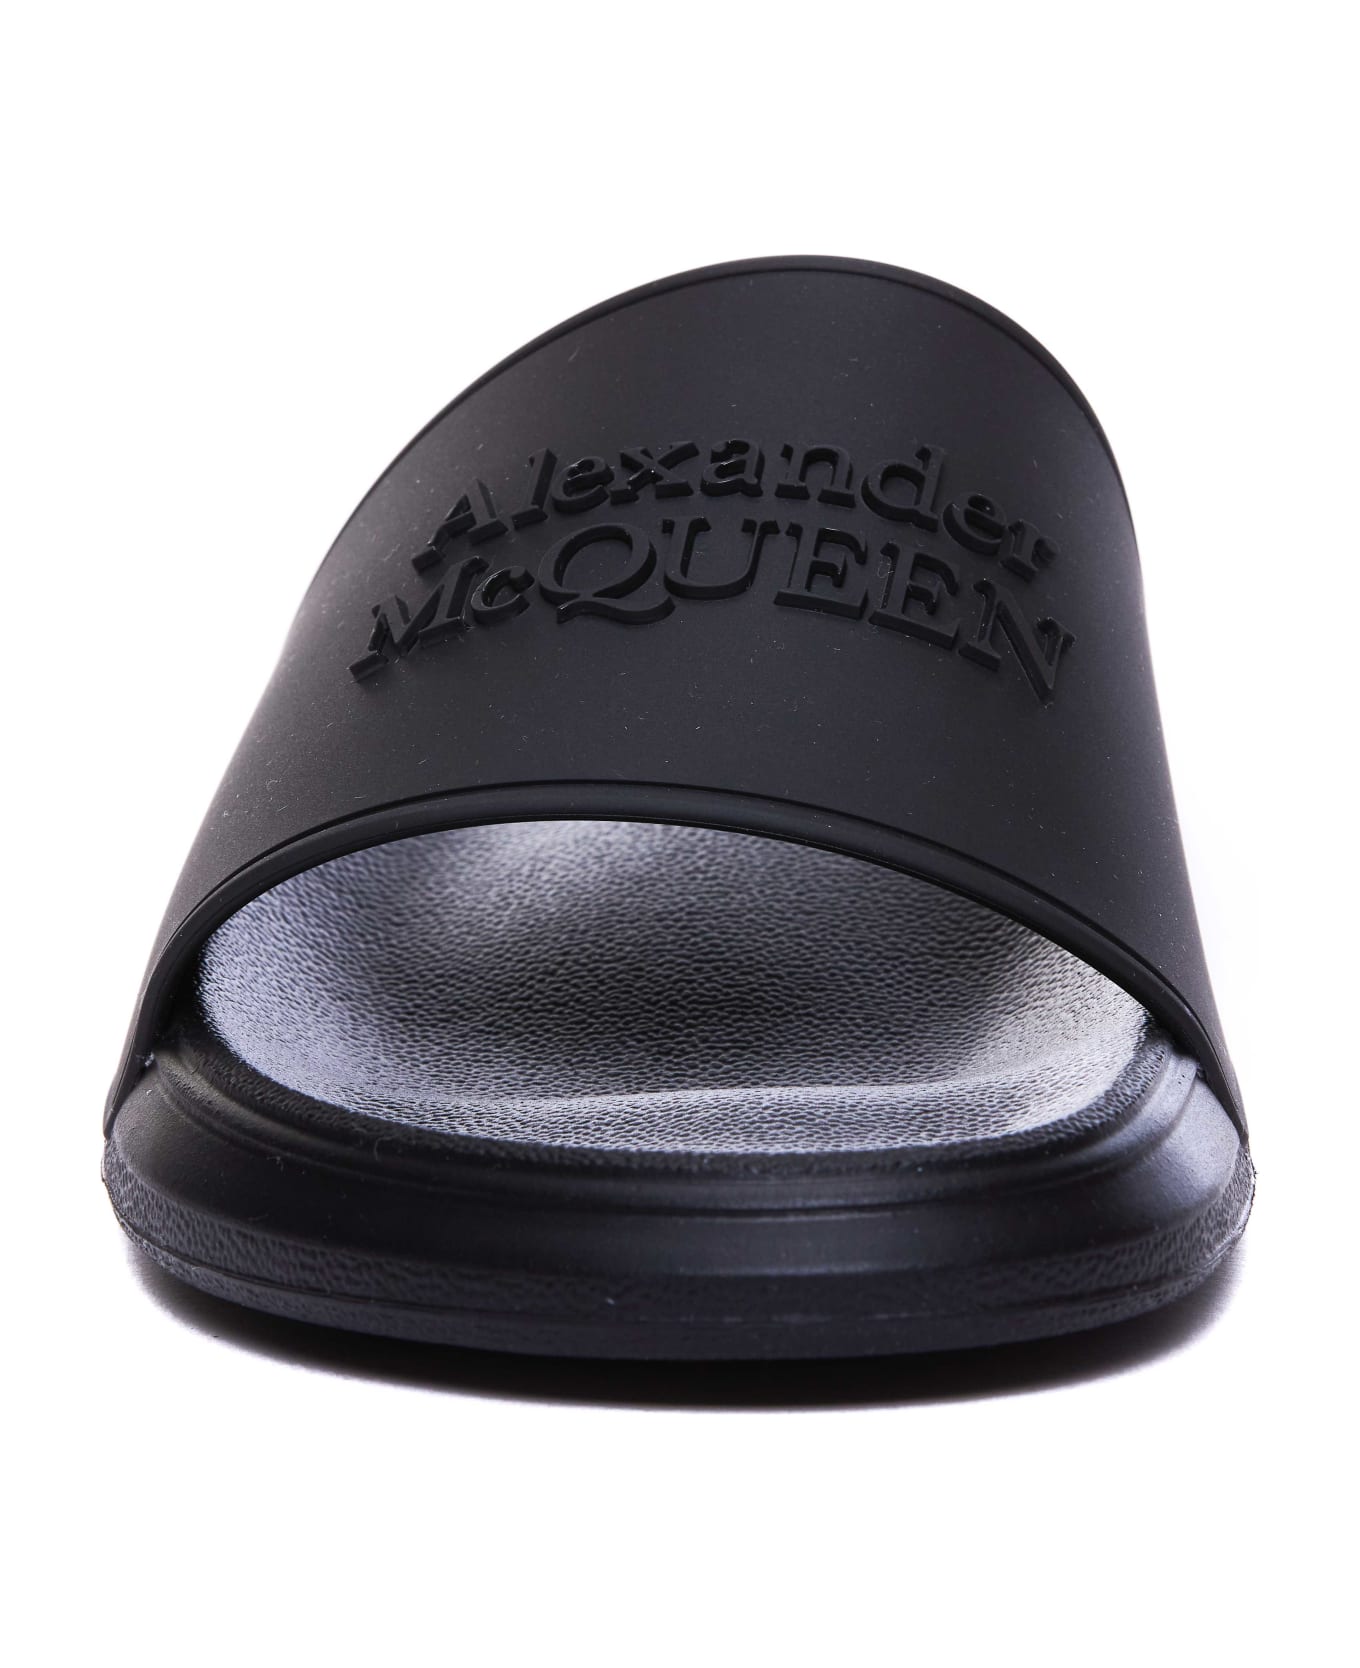 Alexander McQueen Logo Slide Sandals - Black